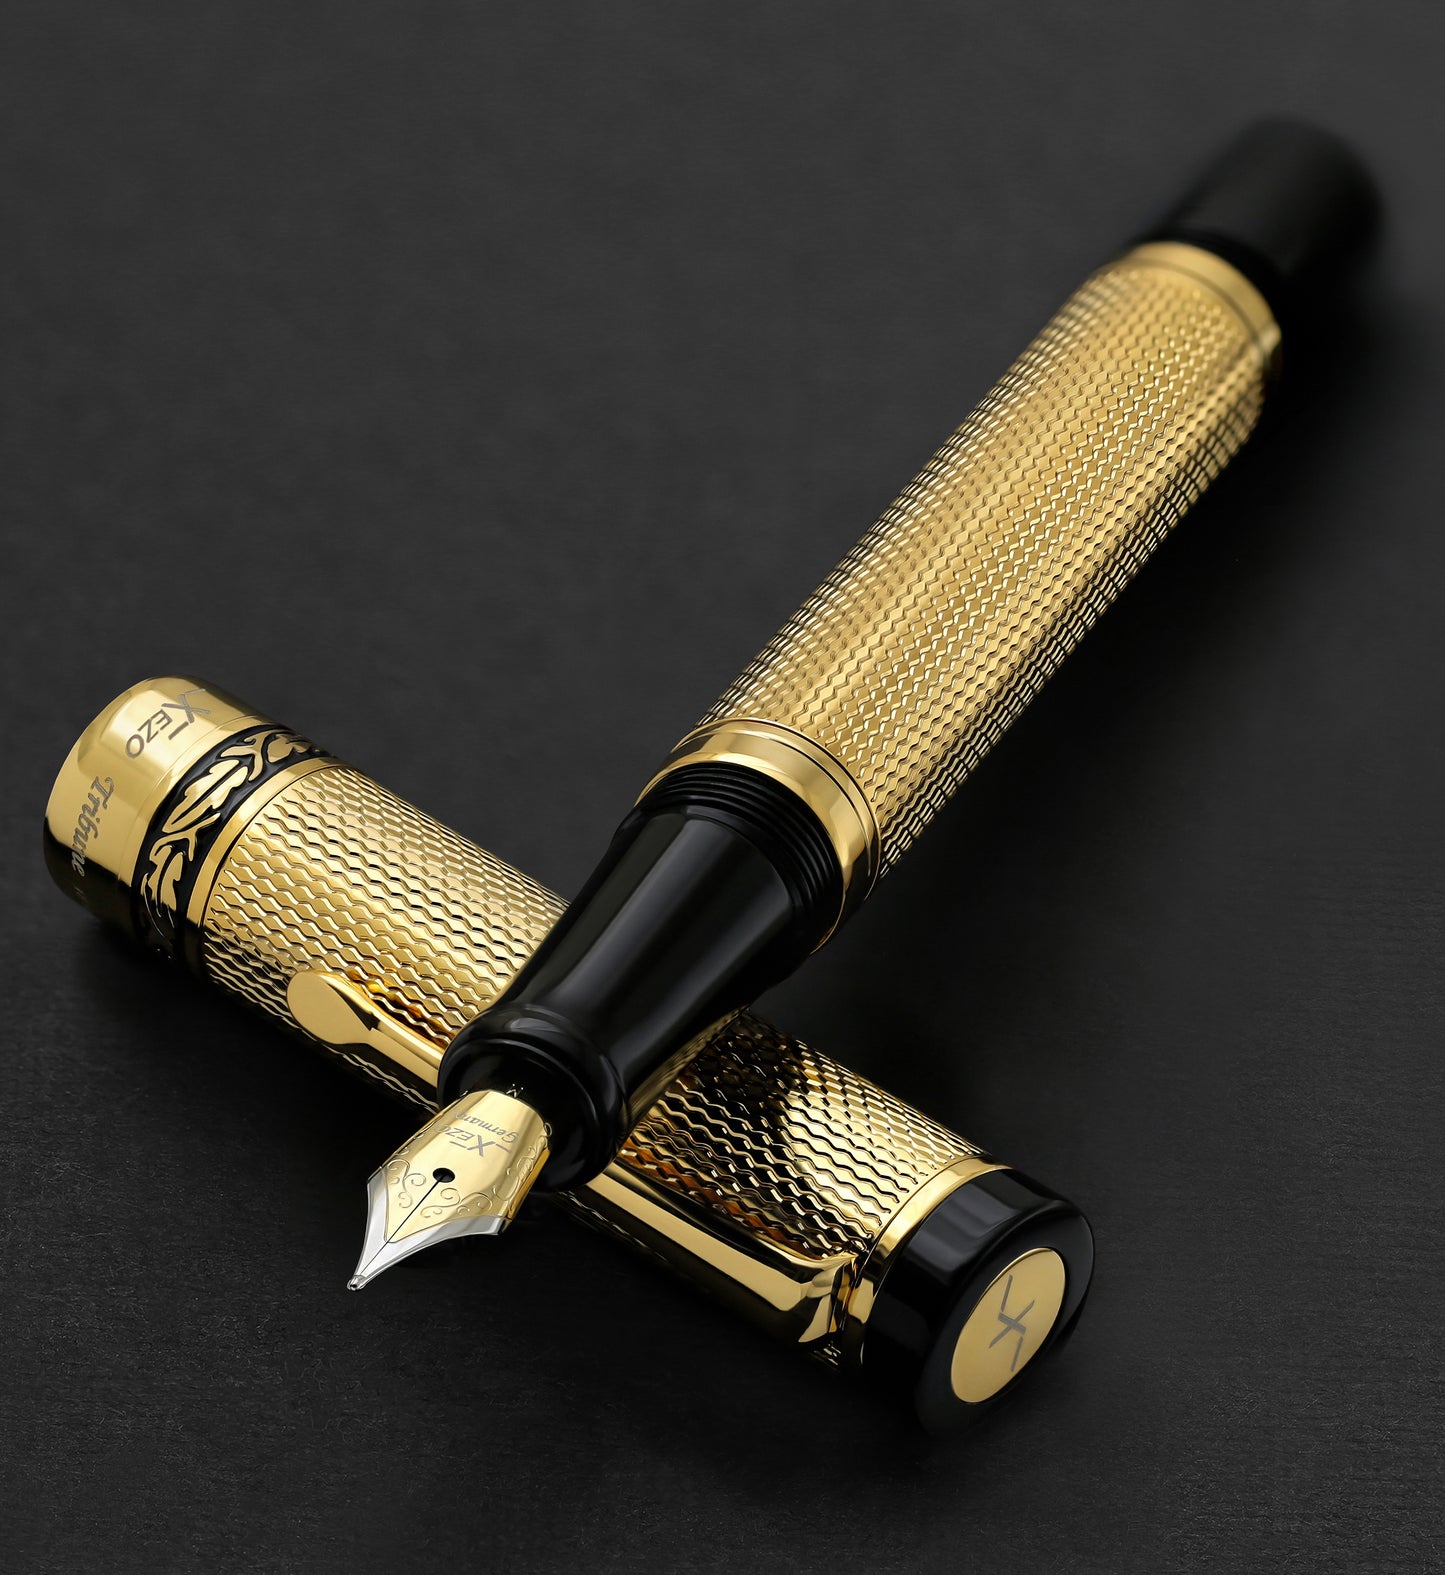 Xezo - Tribune Gold FM fountain pen resting on its cap